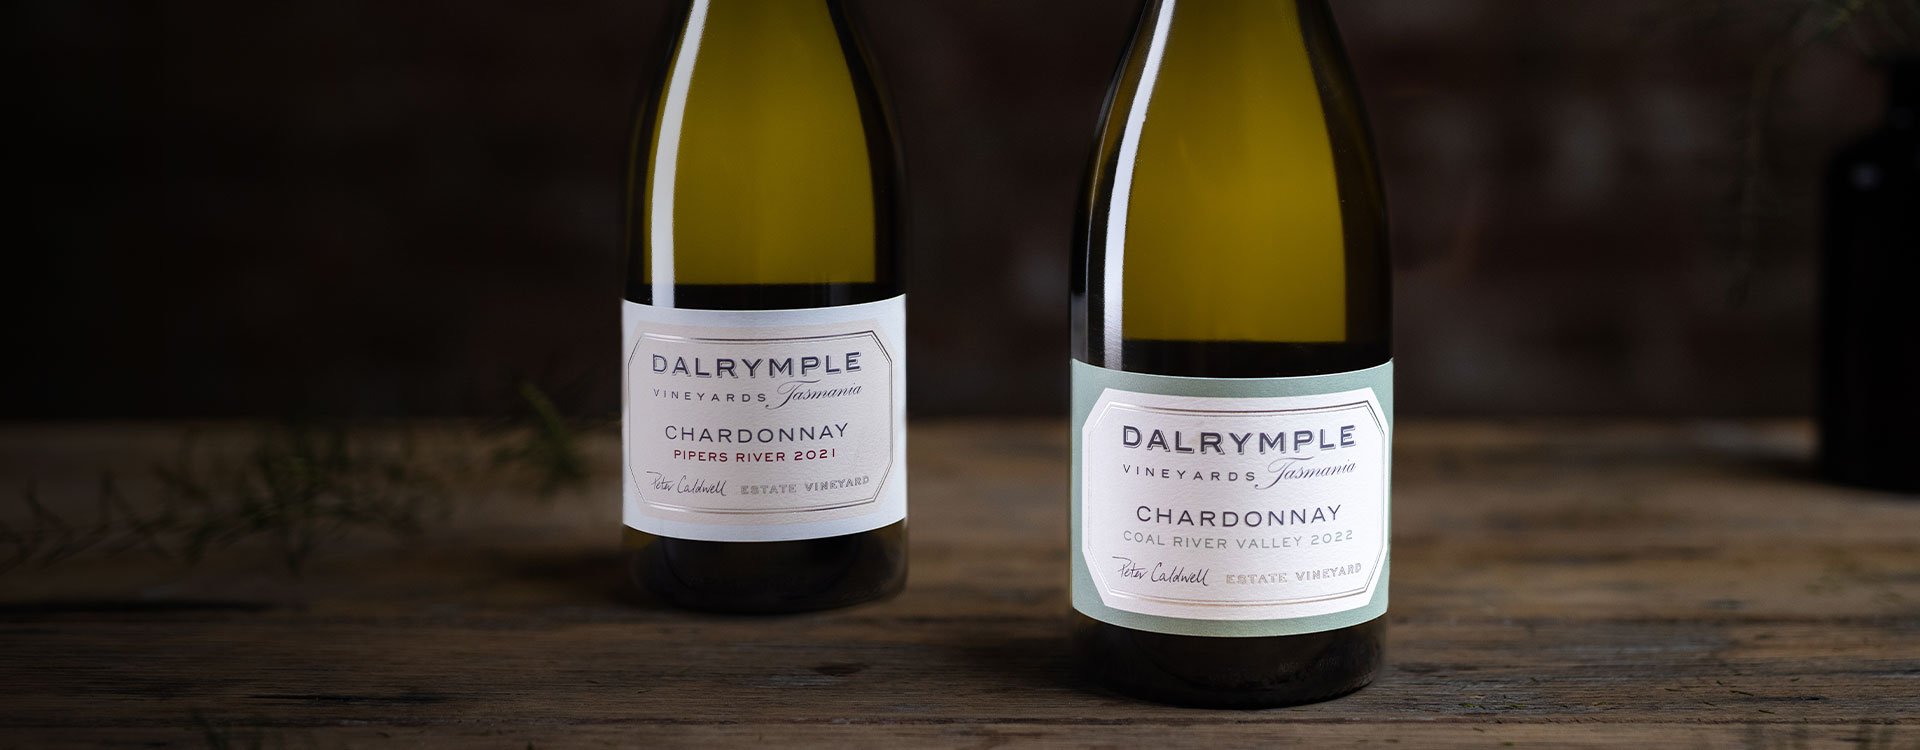 Dalrymple Vineyards Chardonnay Collection